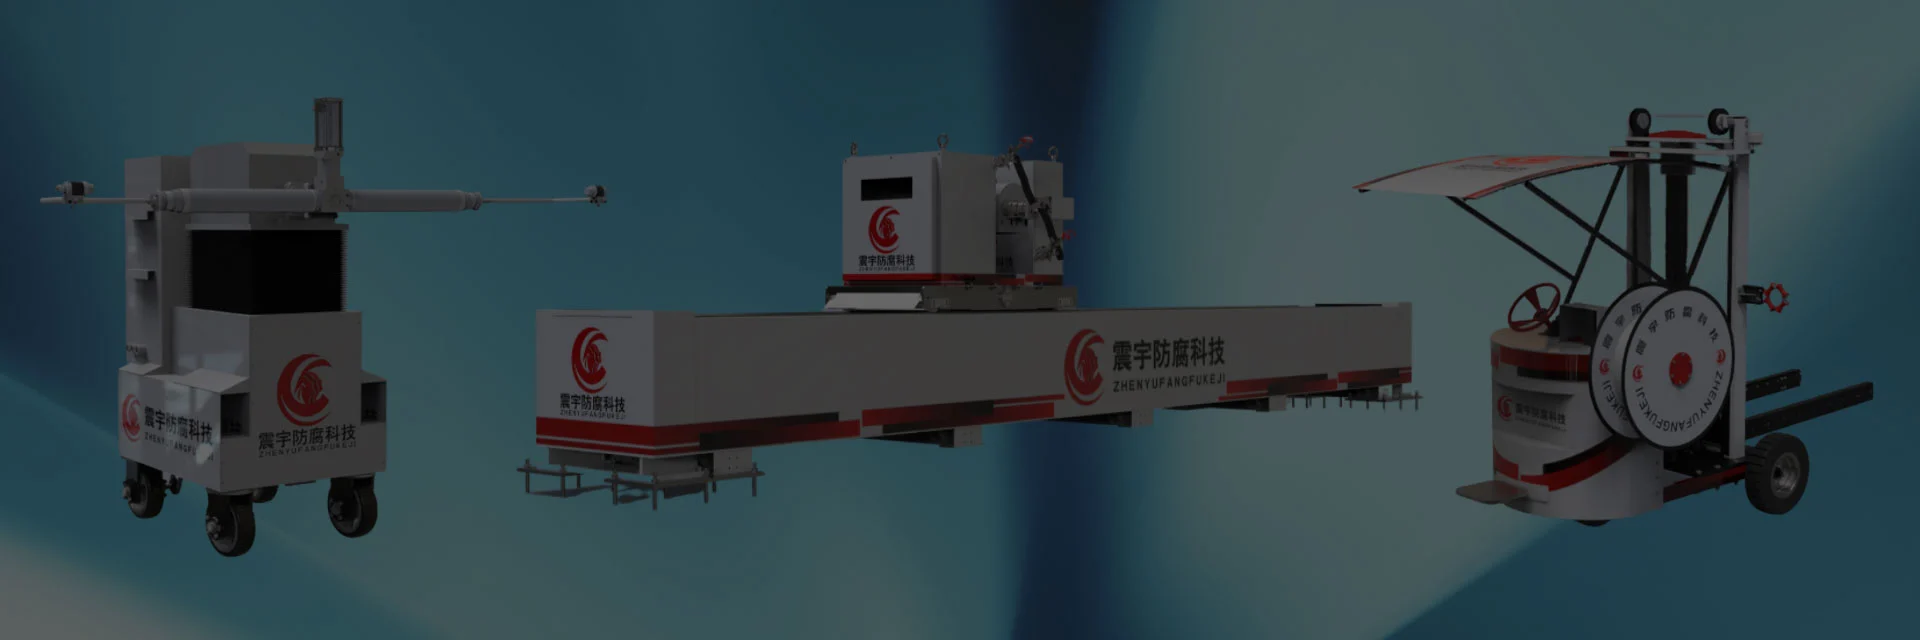 ZY-C-L1000 Onshore Wind Turbine Coating Machine Assiting Forklift